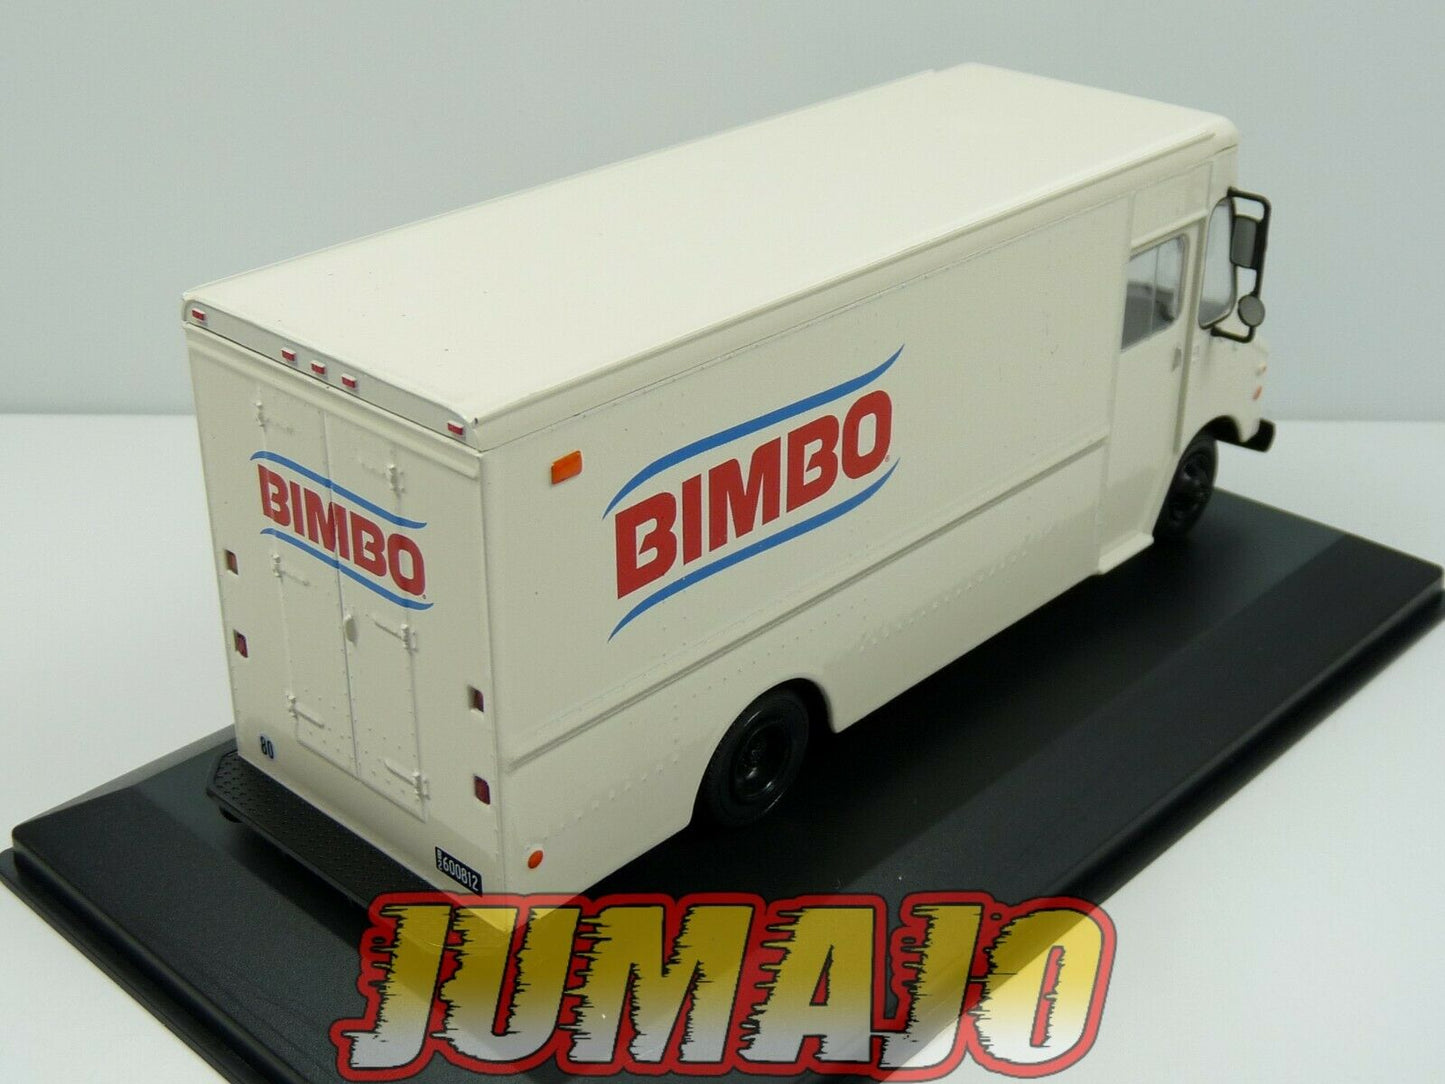 LOT 2 Camion BIMBO Argentine SER6|SSP14 :  Pegaso J4, Grumman Olson